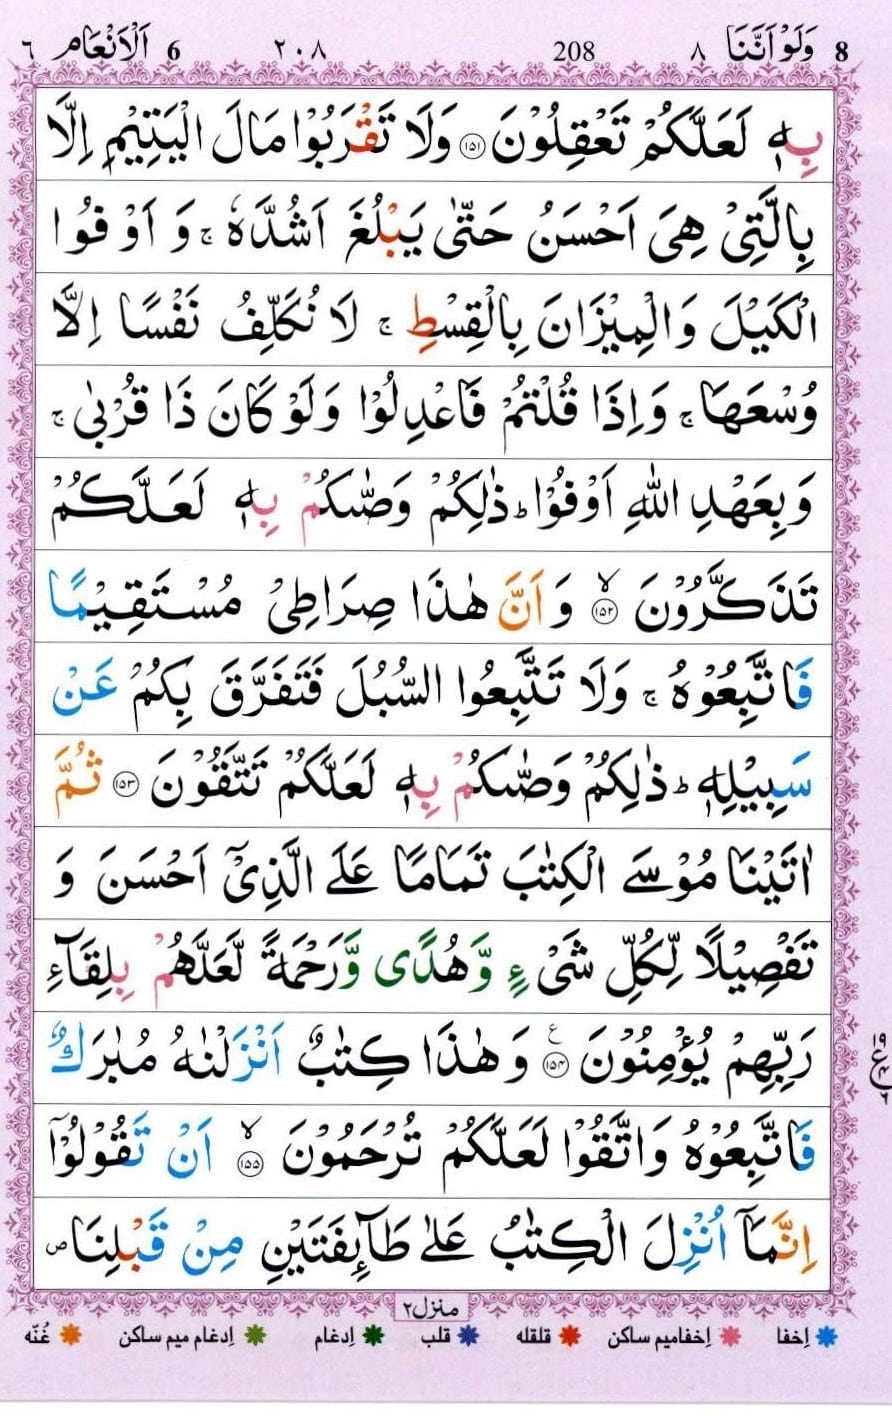 Surah Anaam translation